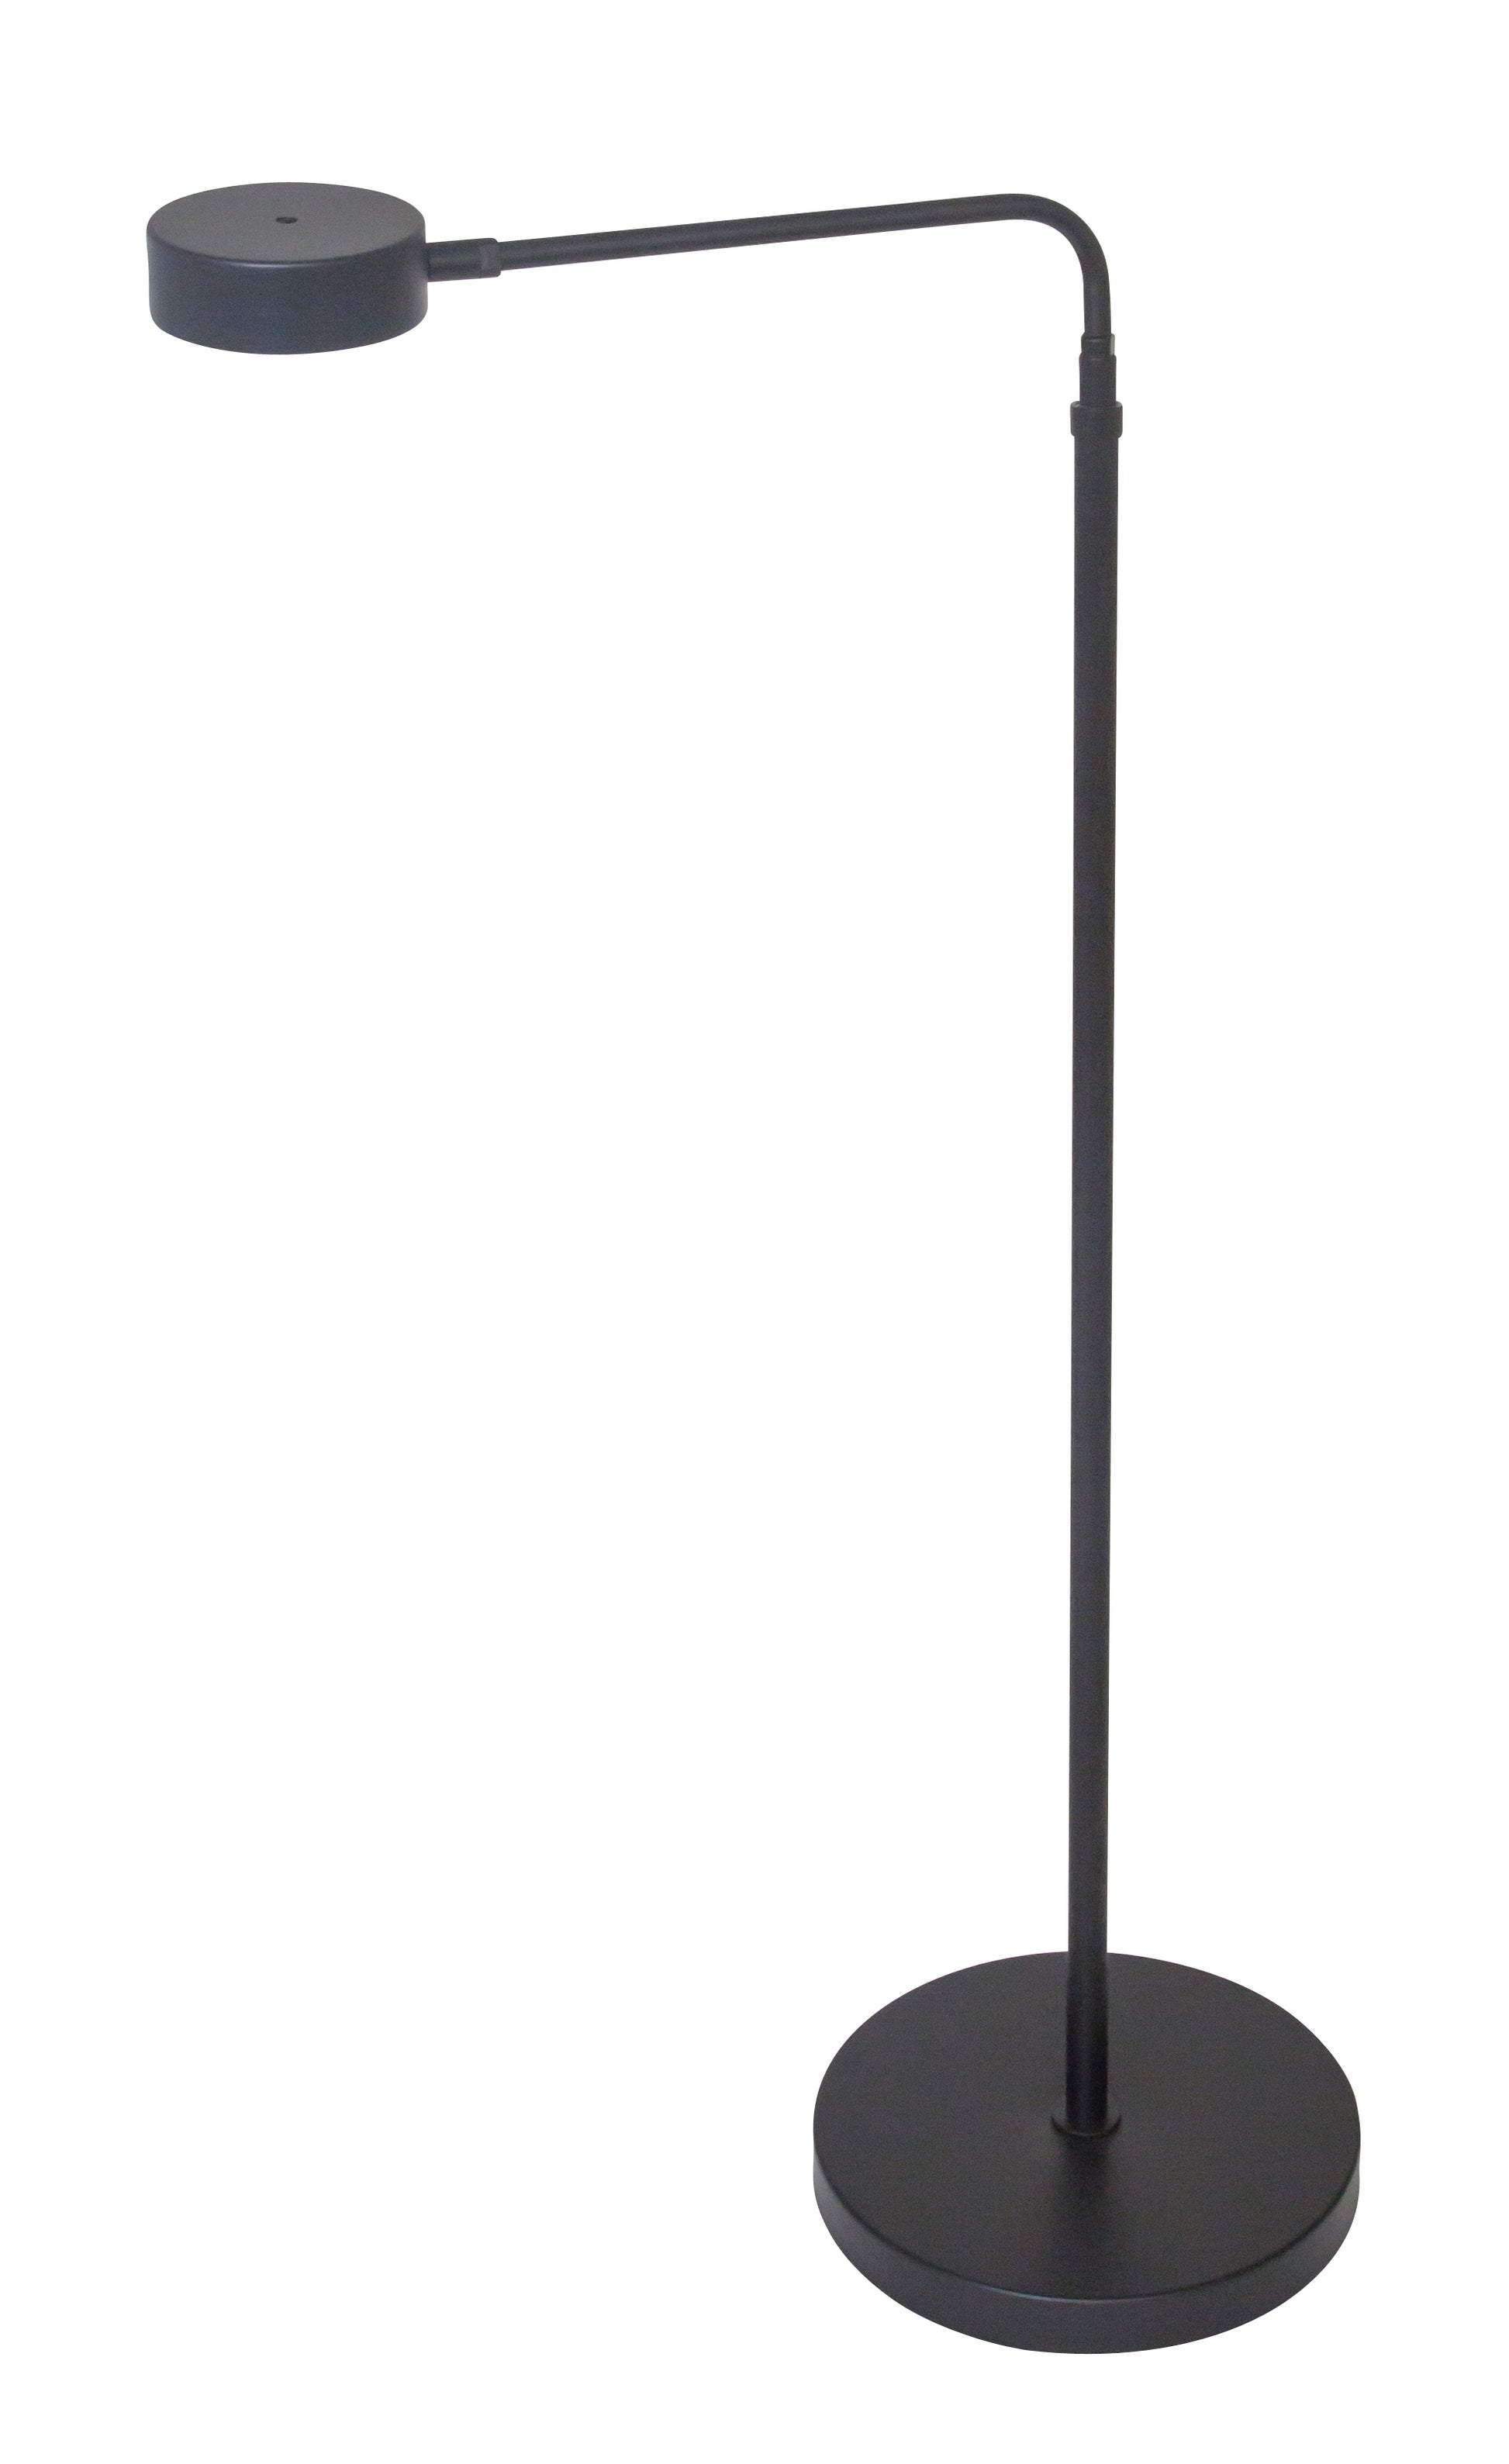 House of Troy Generation adjustable LED floor lamp in black G400-BLK